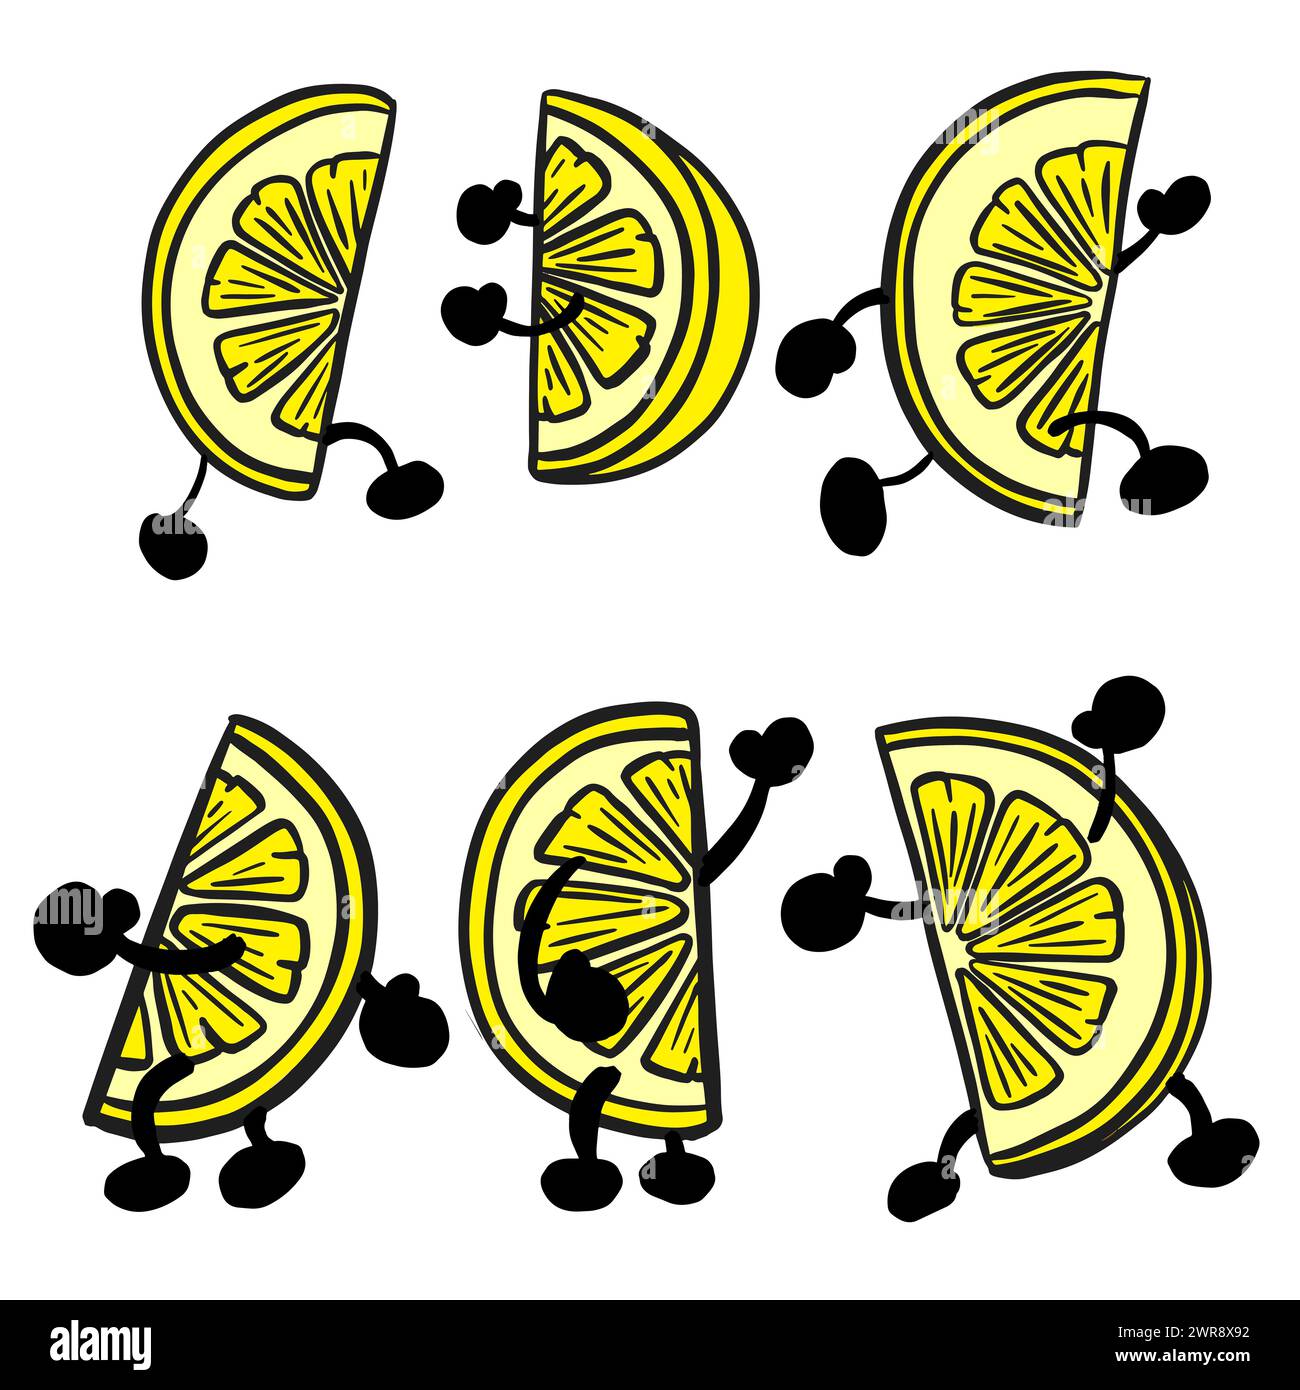 Funny Cartoon Character Fruit Slice Mascot Illustration Lime Stock Photo